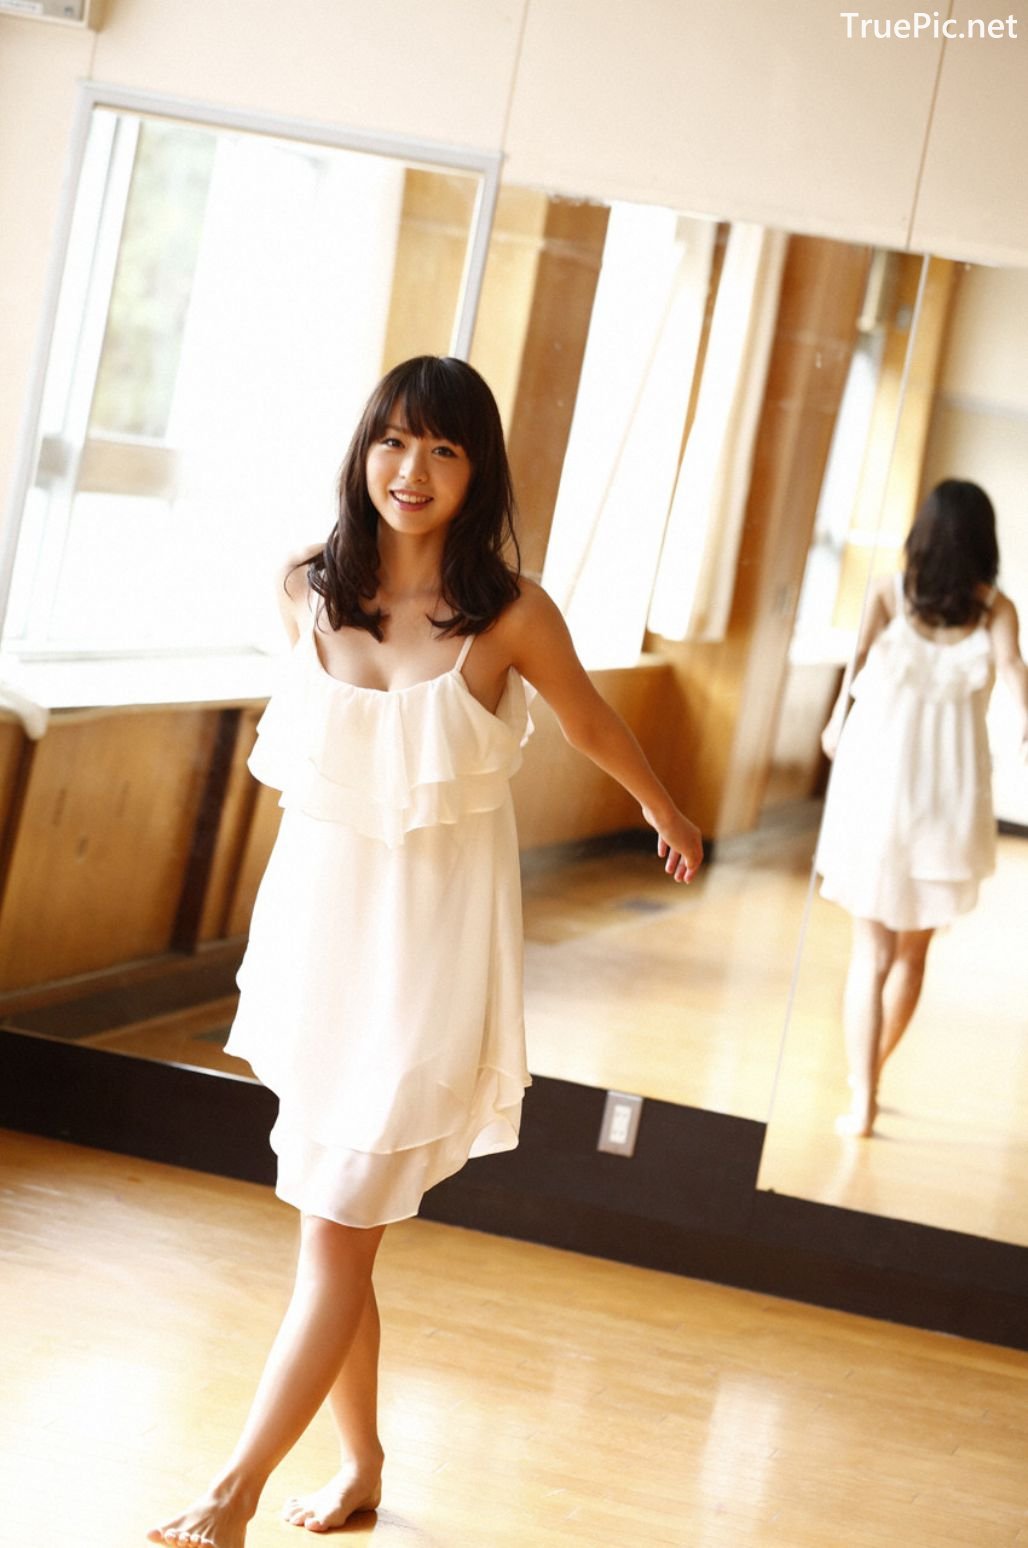 Image-Japanese-Gravure-Idol-Mio-Otani-Photos-Purity-Miss-Magazine-TruePic.net- Picture-26